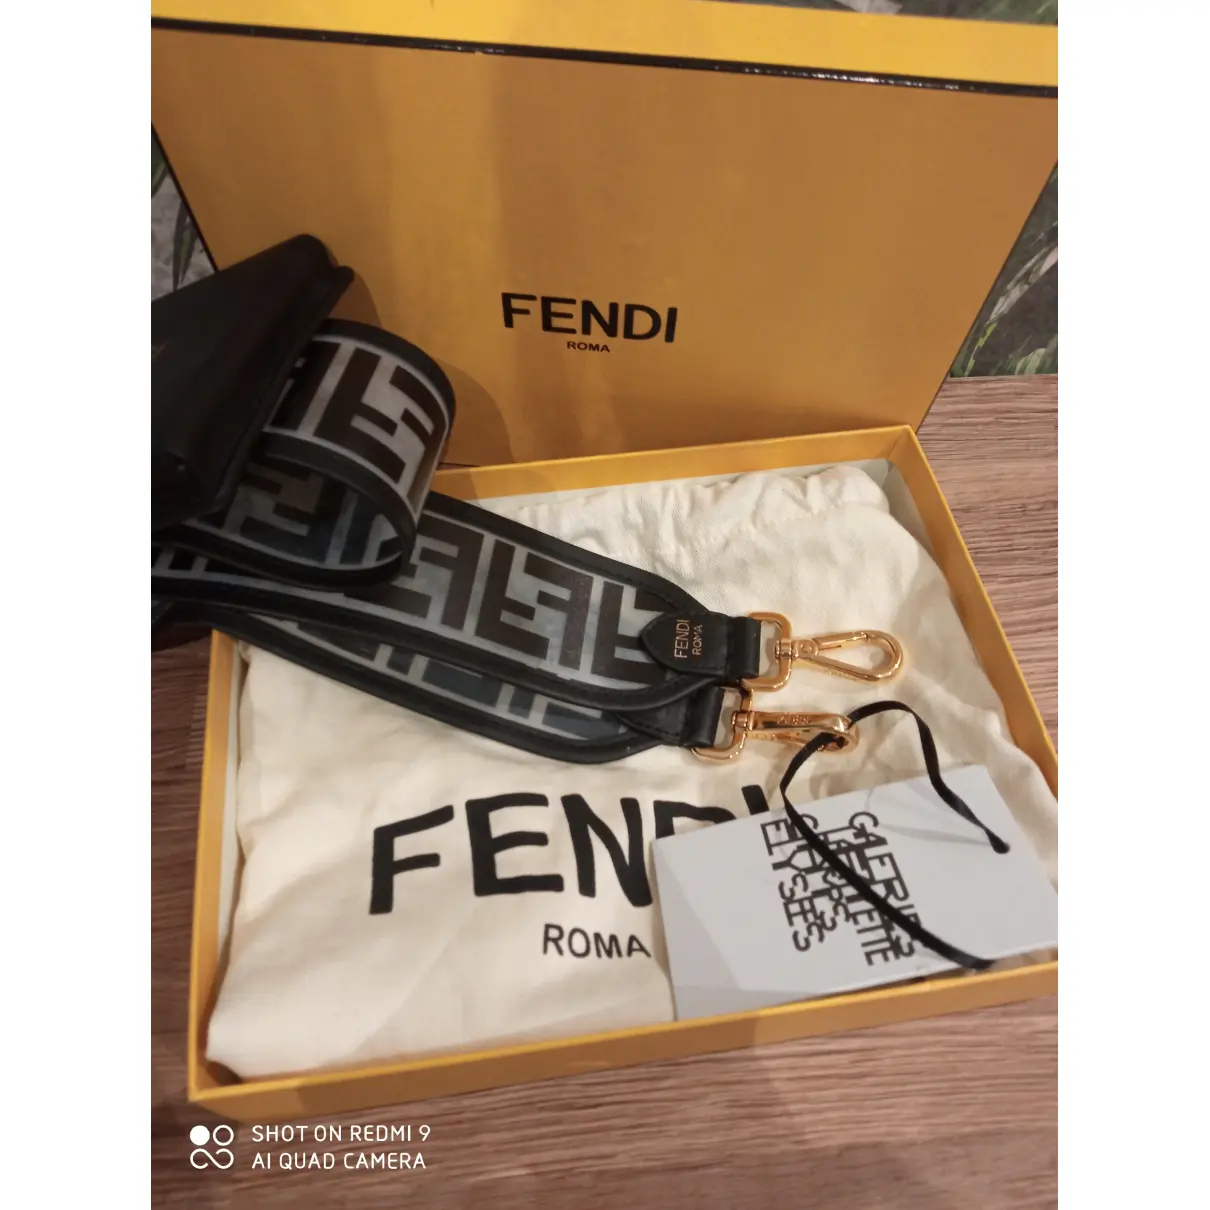 Buy Fendi Baguette leather purse online